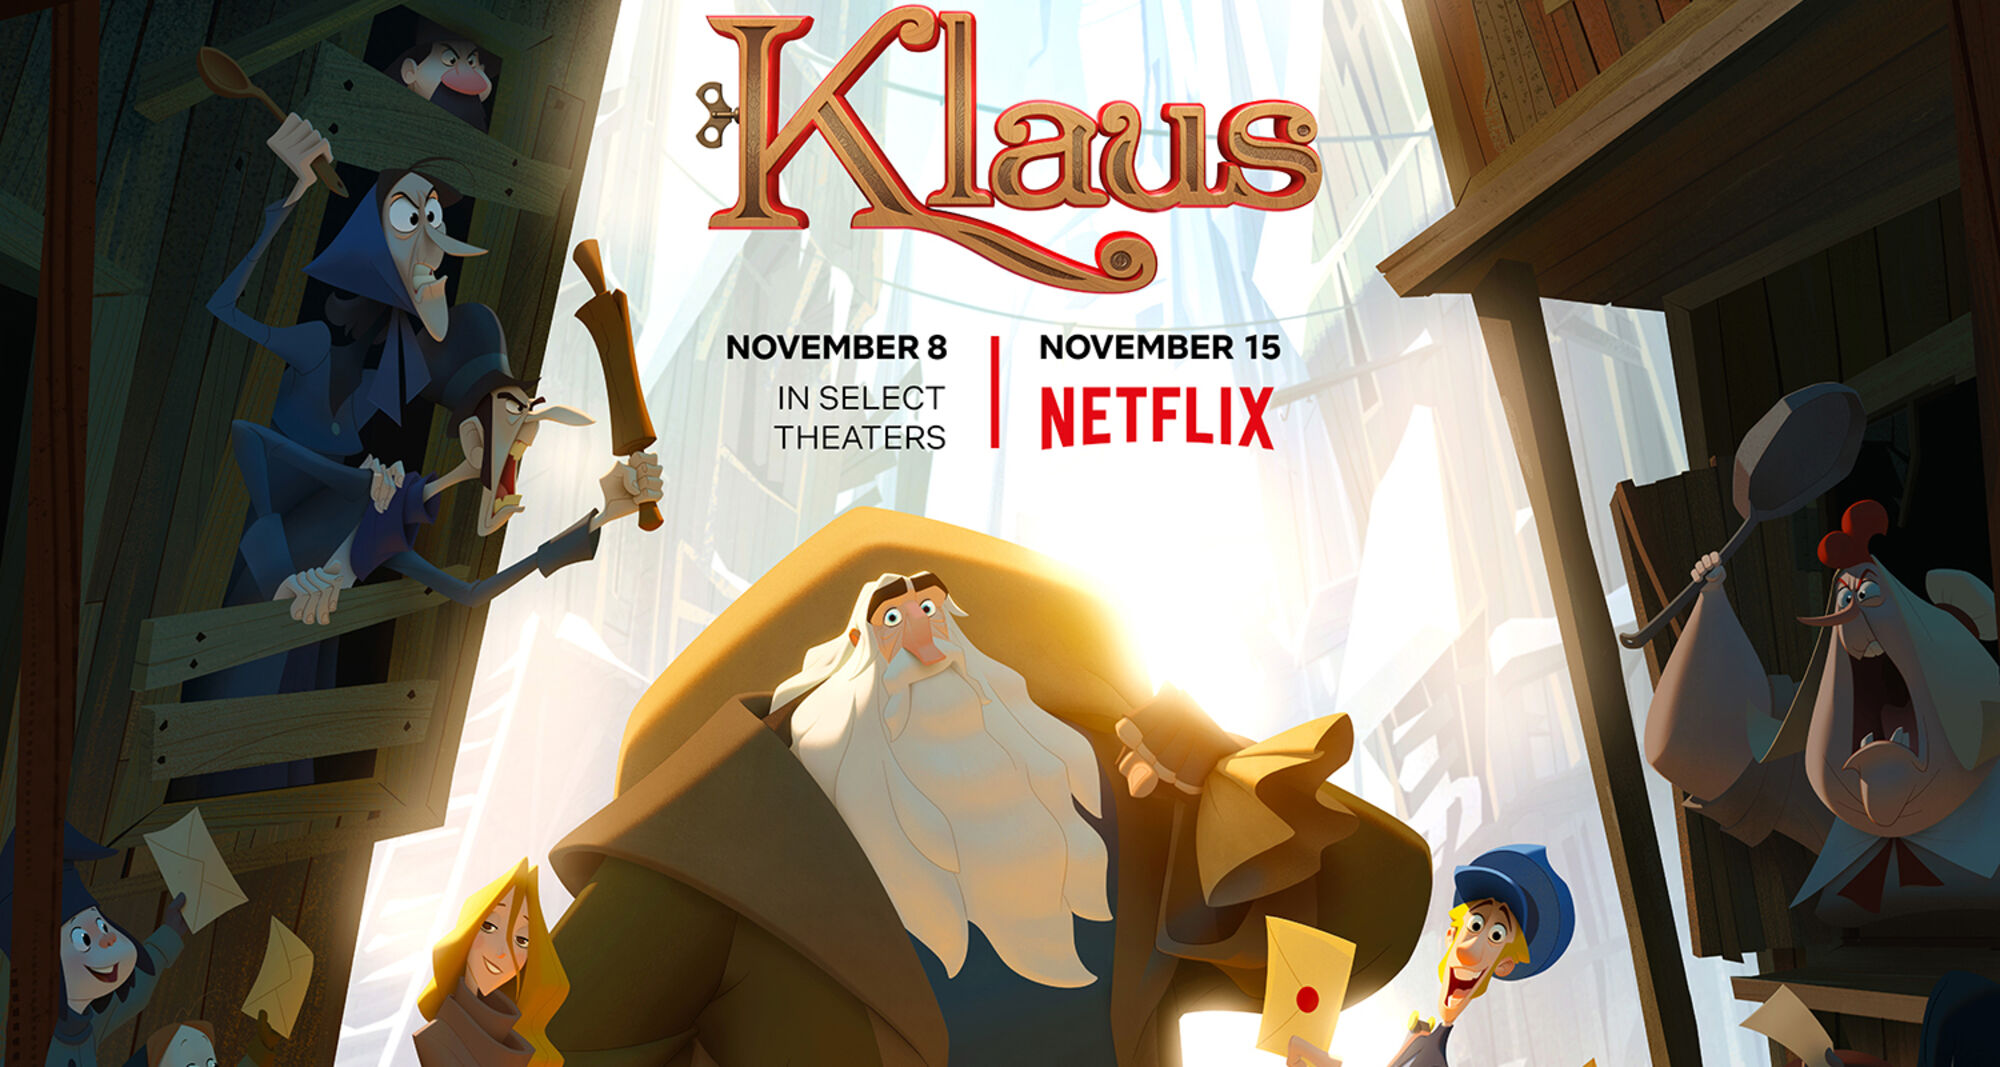 Klaus is a 2019 Spanish animated Christmas comedy-drama film